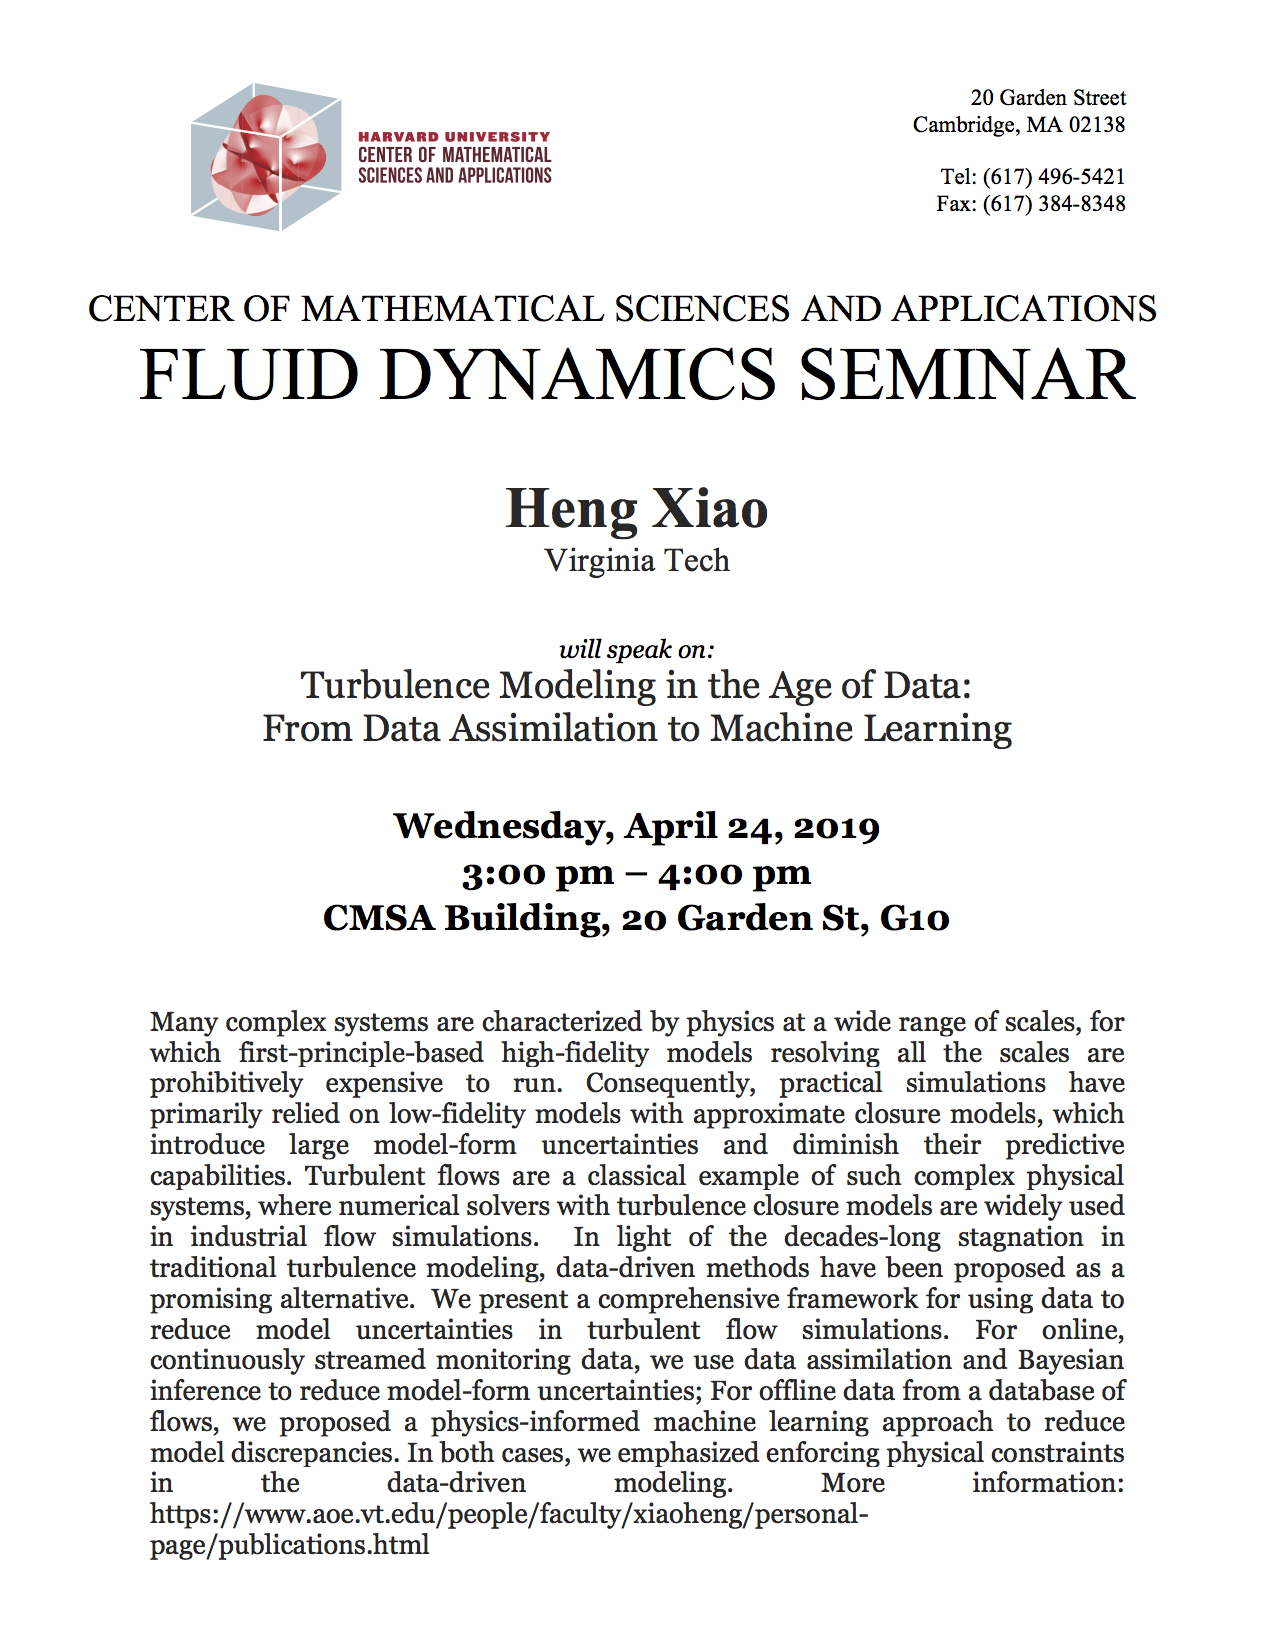 Fluid Dynamics Seminar